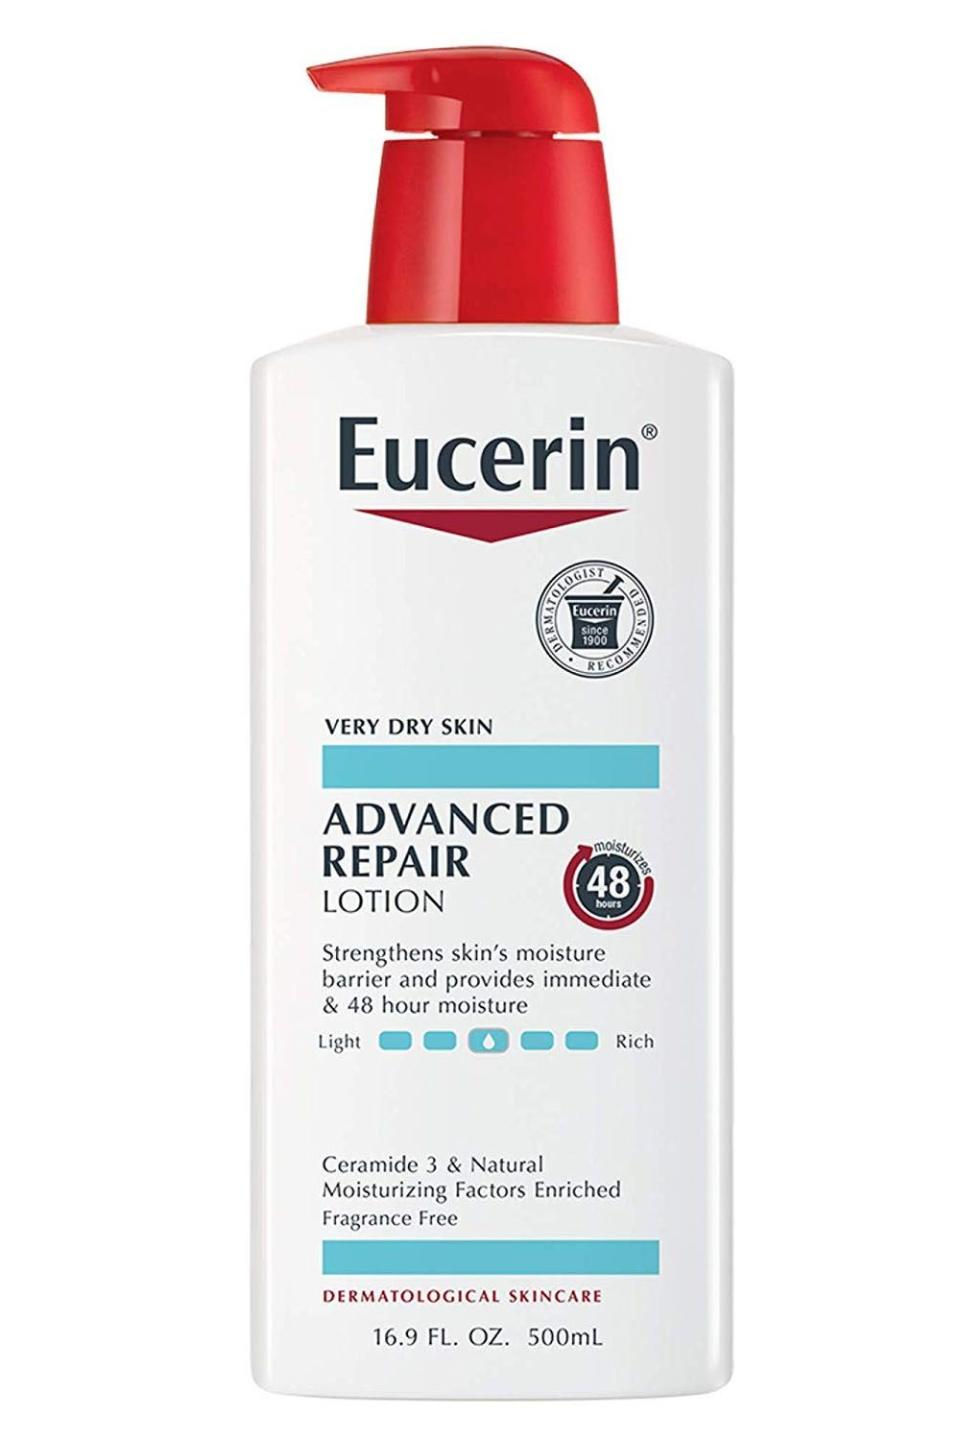 12) Eucerin Advanced Repair Lotion